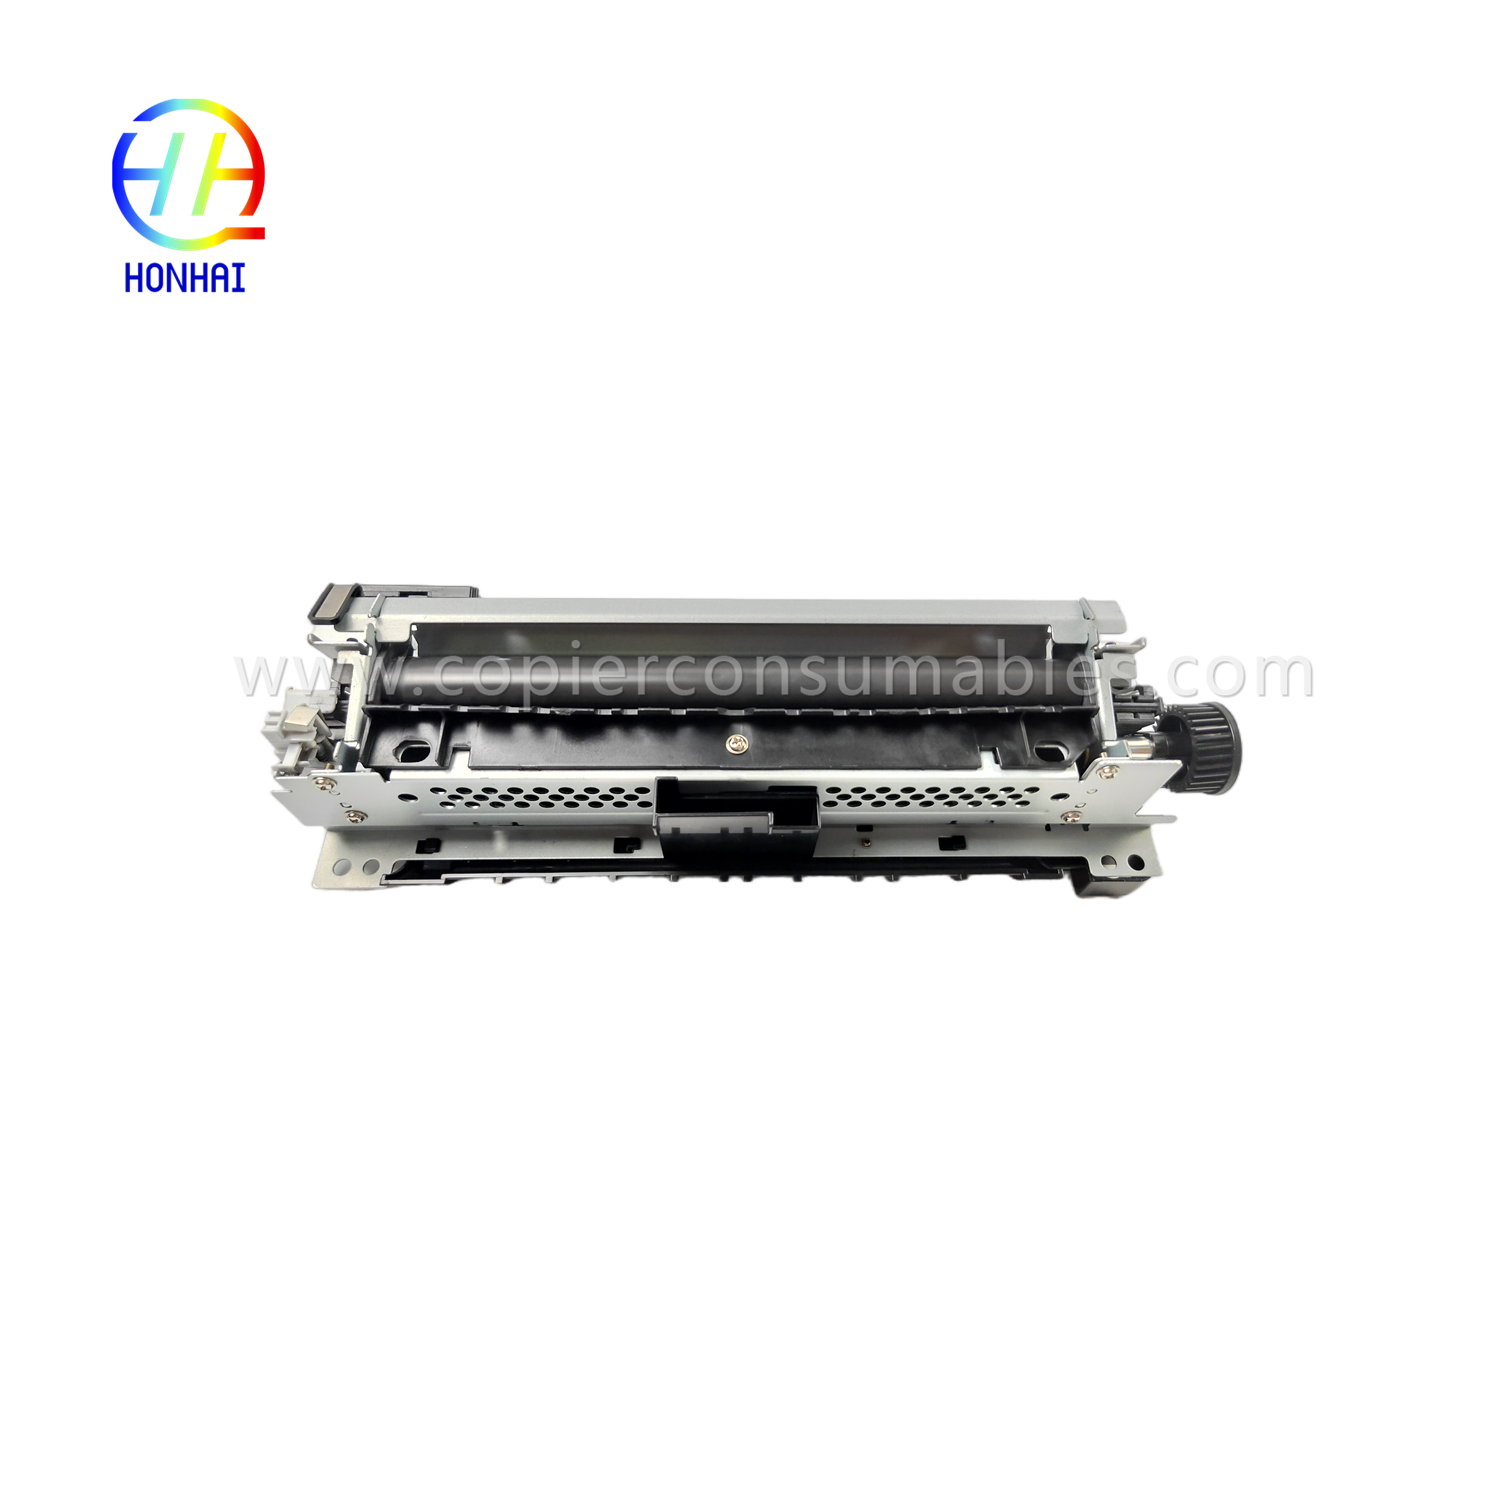 Fuser Assembly 220V (Japan)for HP 521 525  M521 M525  RM1-8508 RM1-8508-000 Fuser Unit  (5)